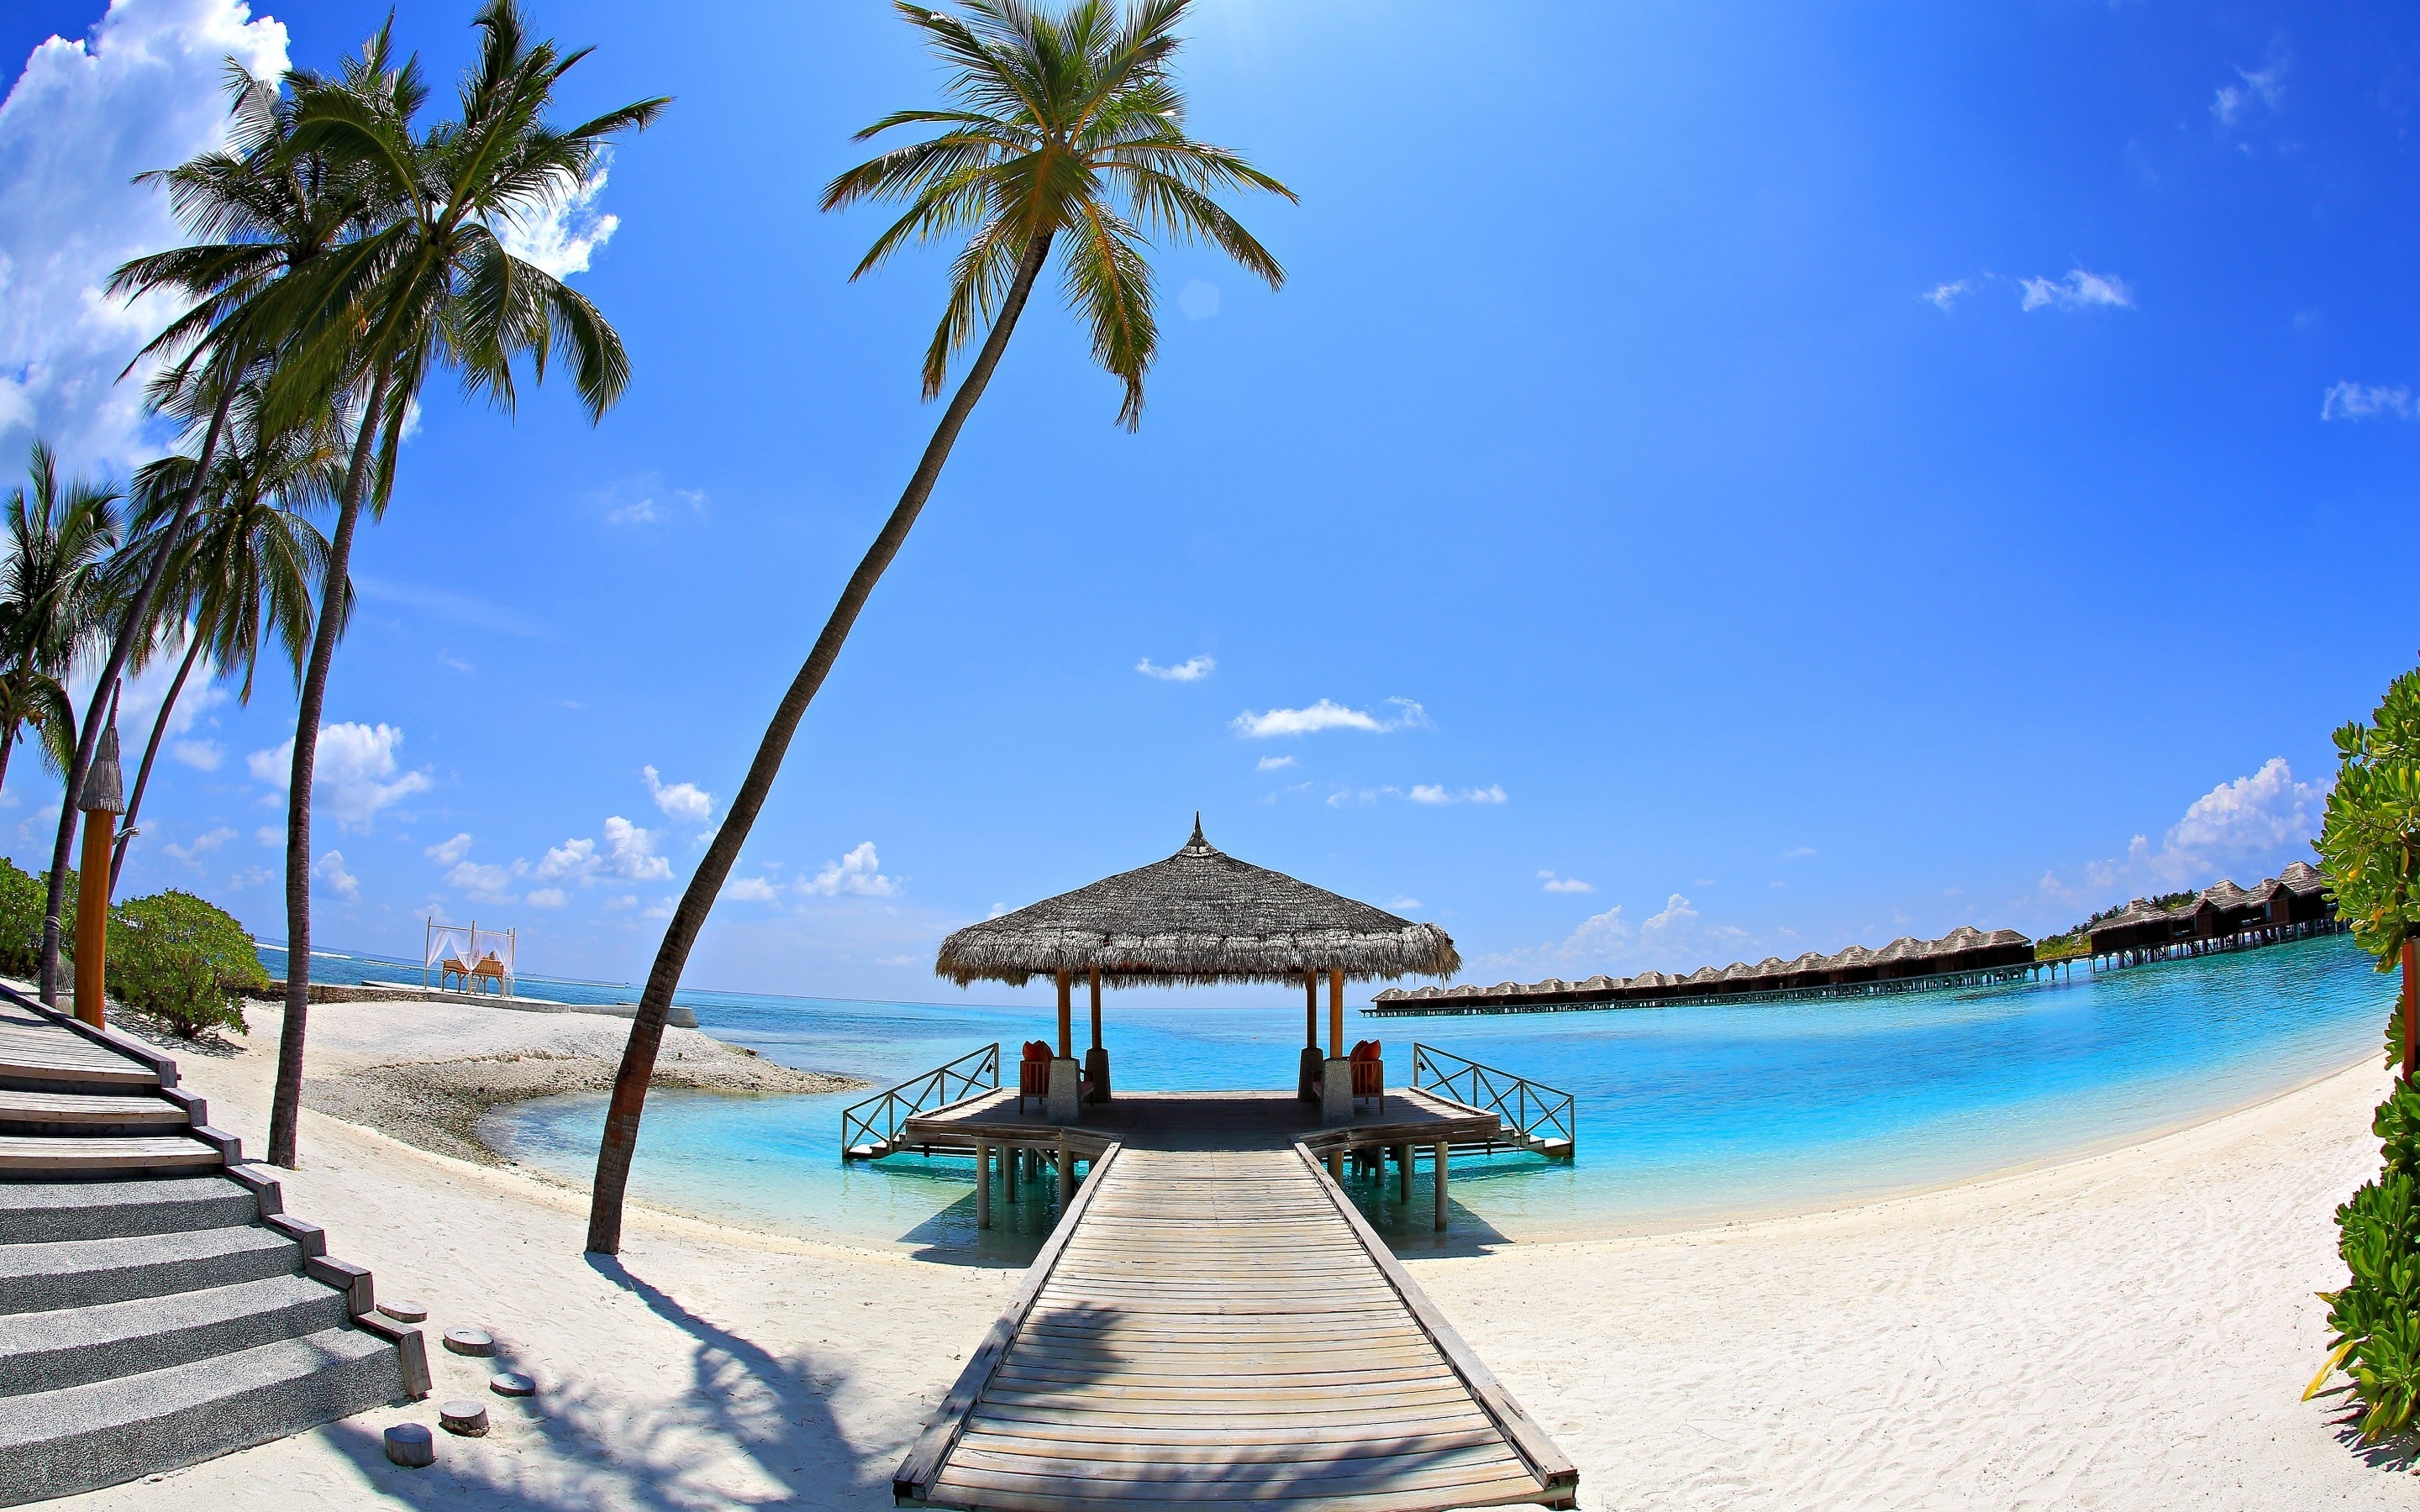 Sunny Palm Beach Corner  for 2880 x 1800 Retina Display resolution